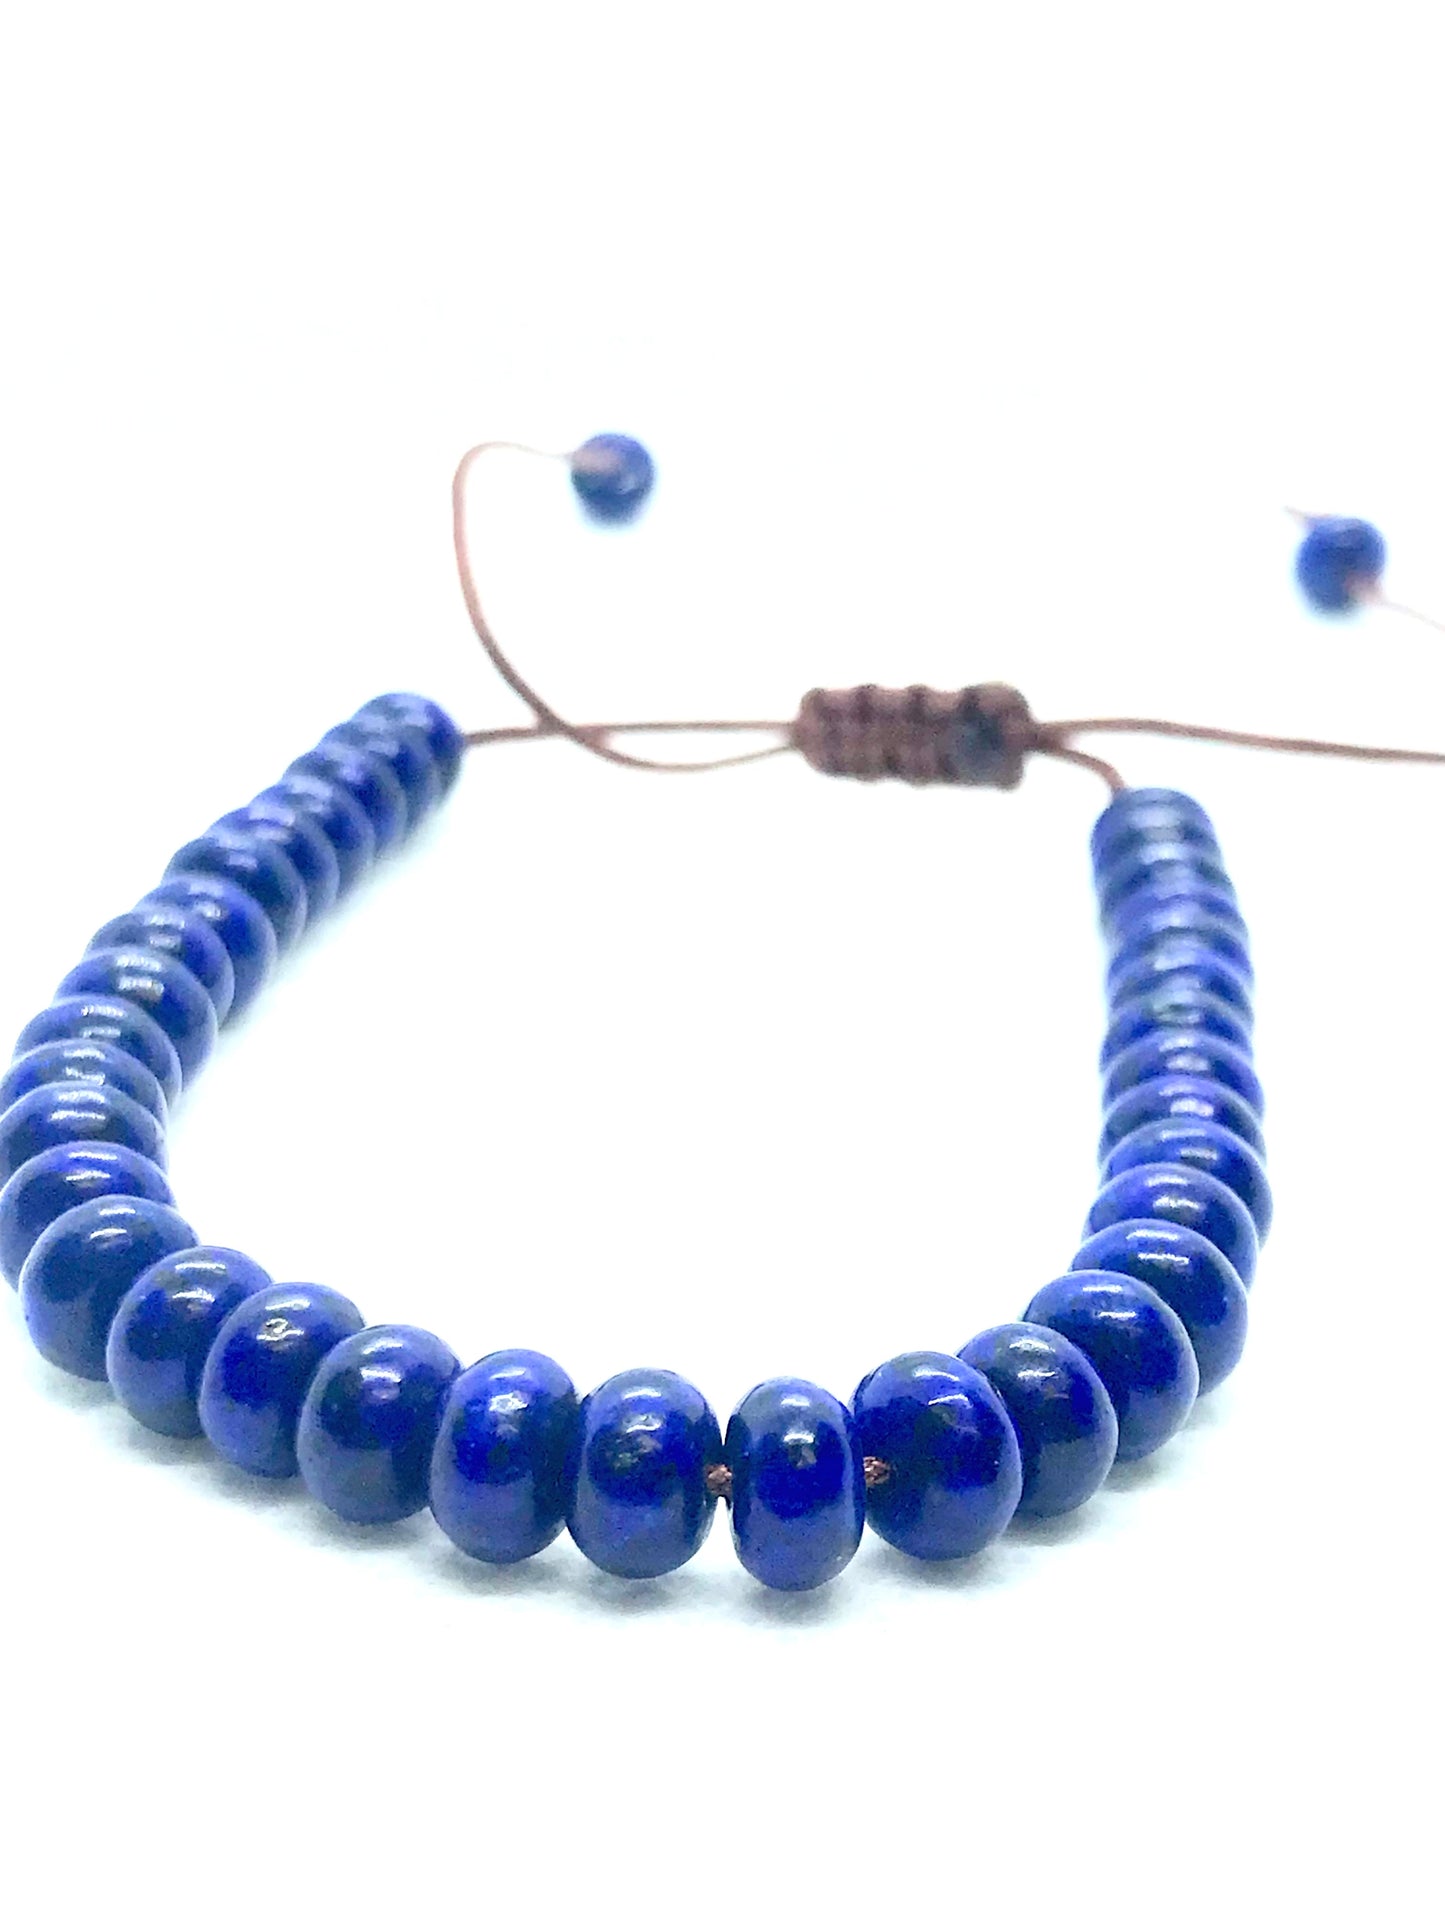 Lapiz Lazuli Mens or Woman's Bracelet  4-6mm beads